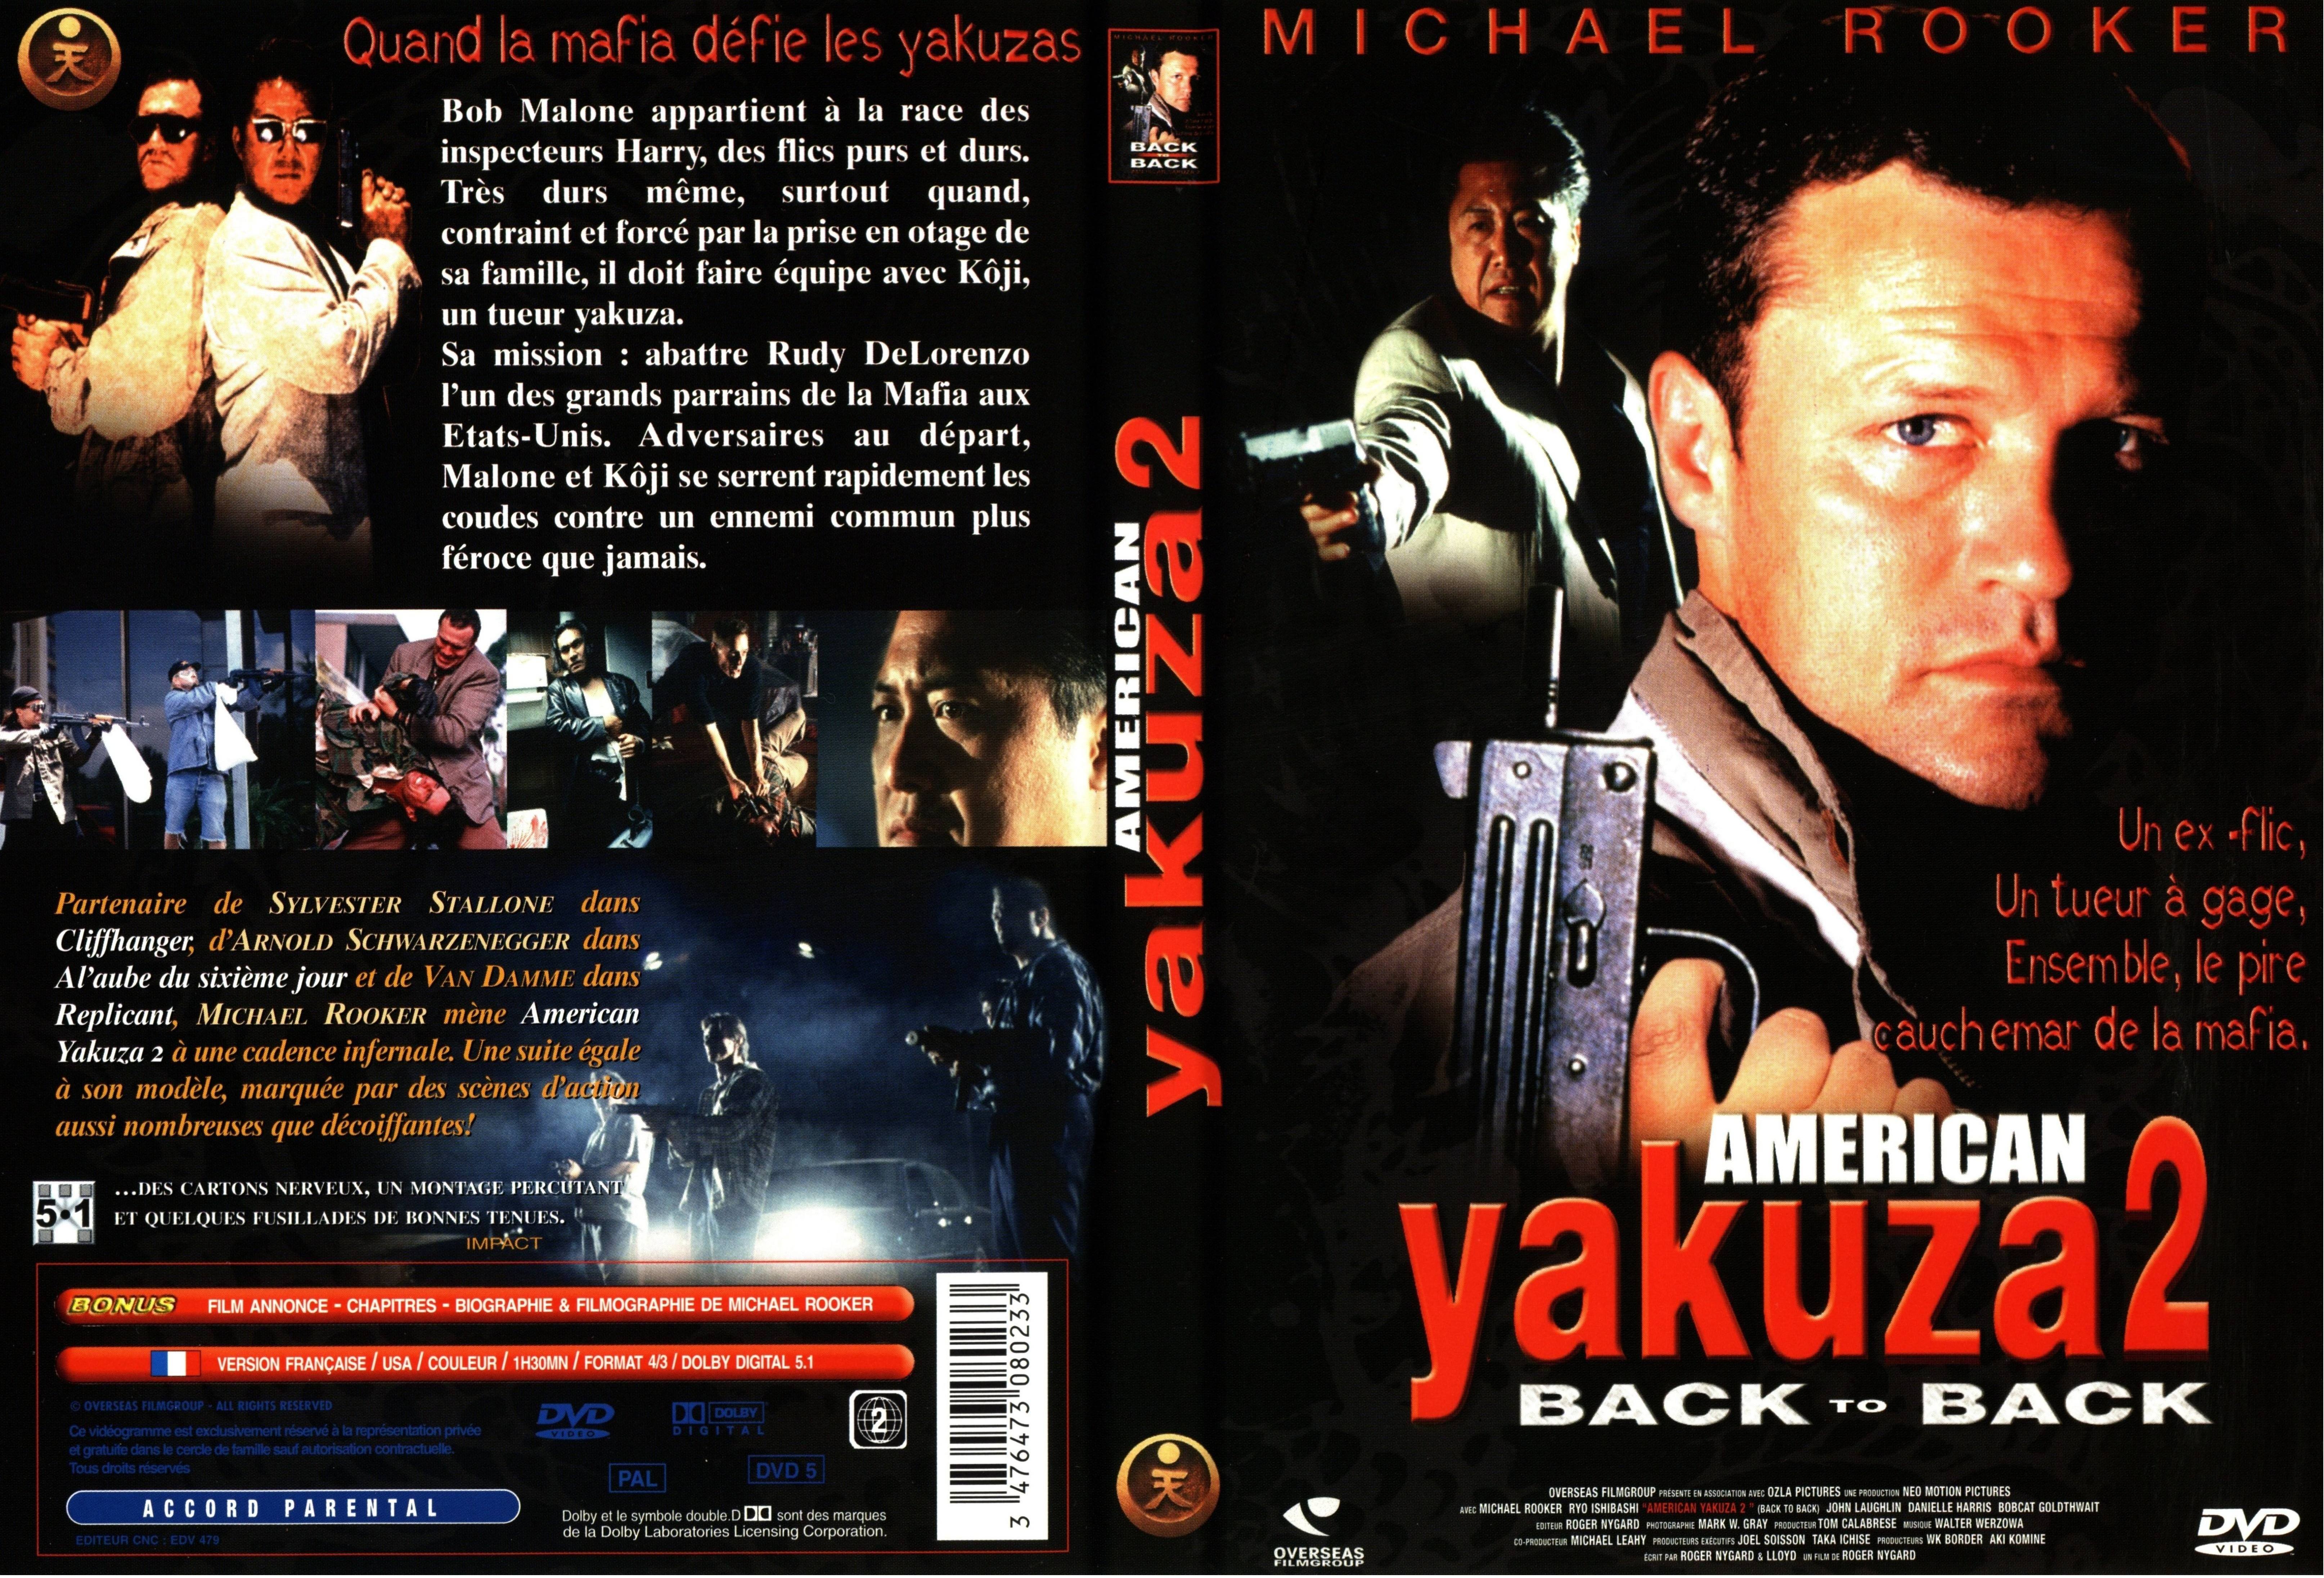 Jaquette DVD American yakuza 2 v2